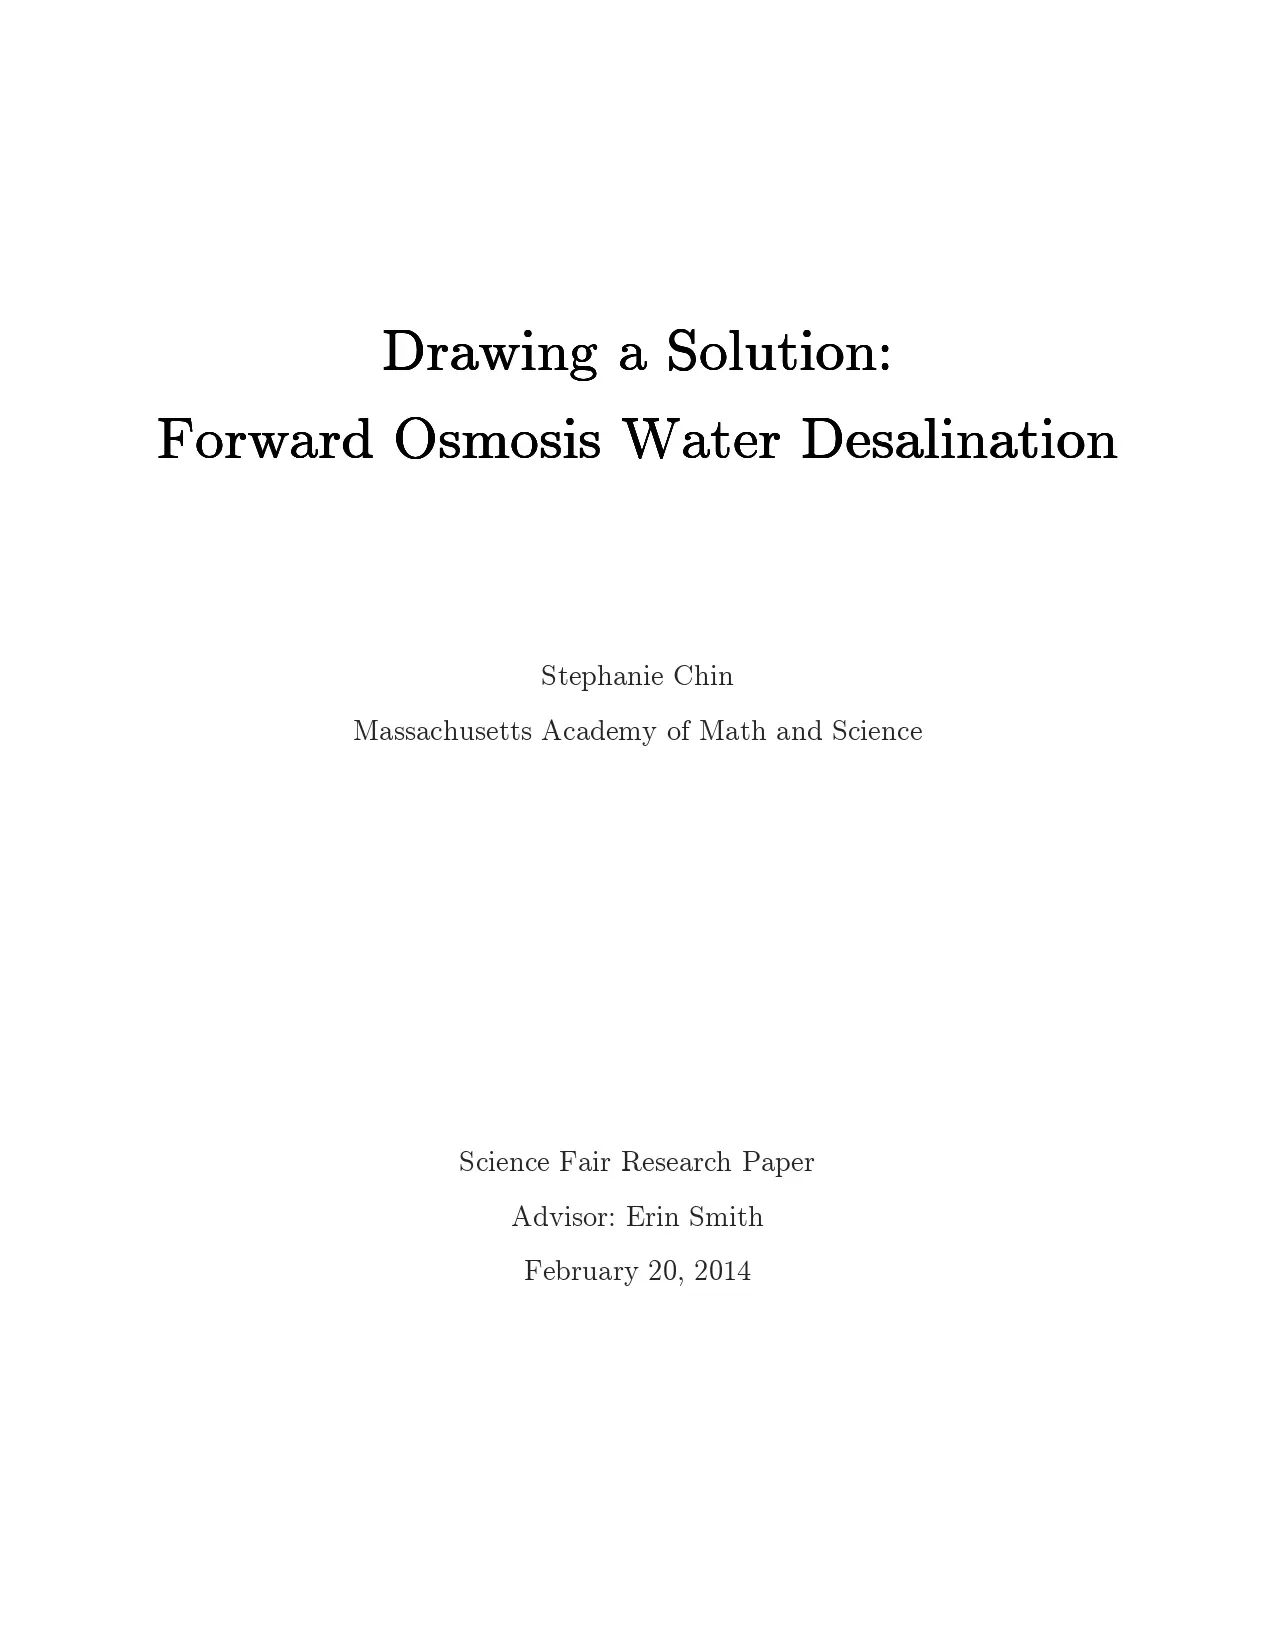 Drawing a Solution: Forward Osmosis Water Desalination